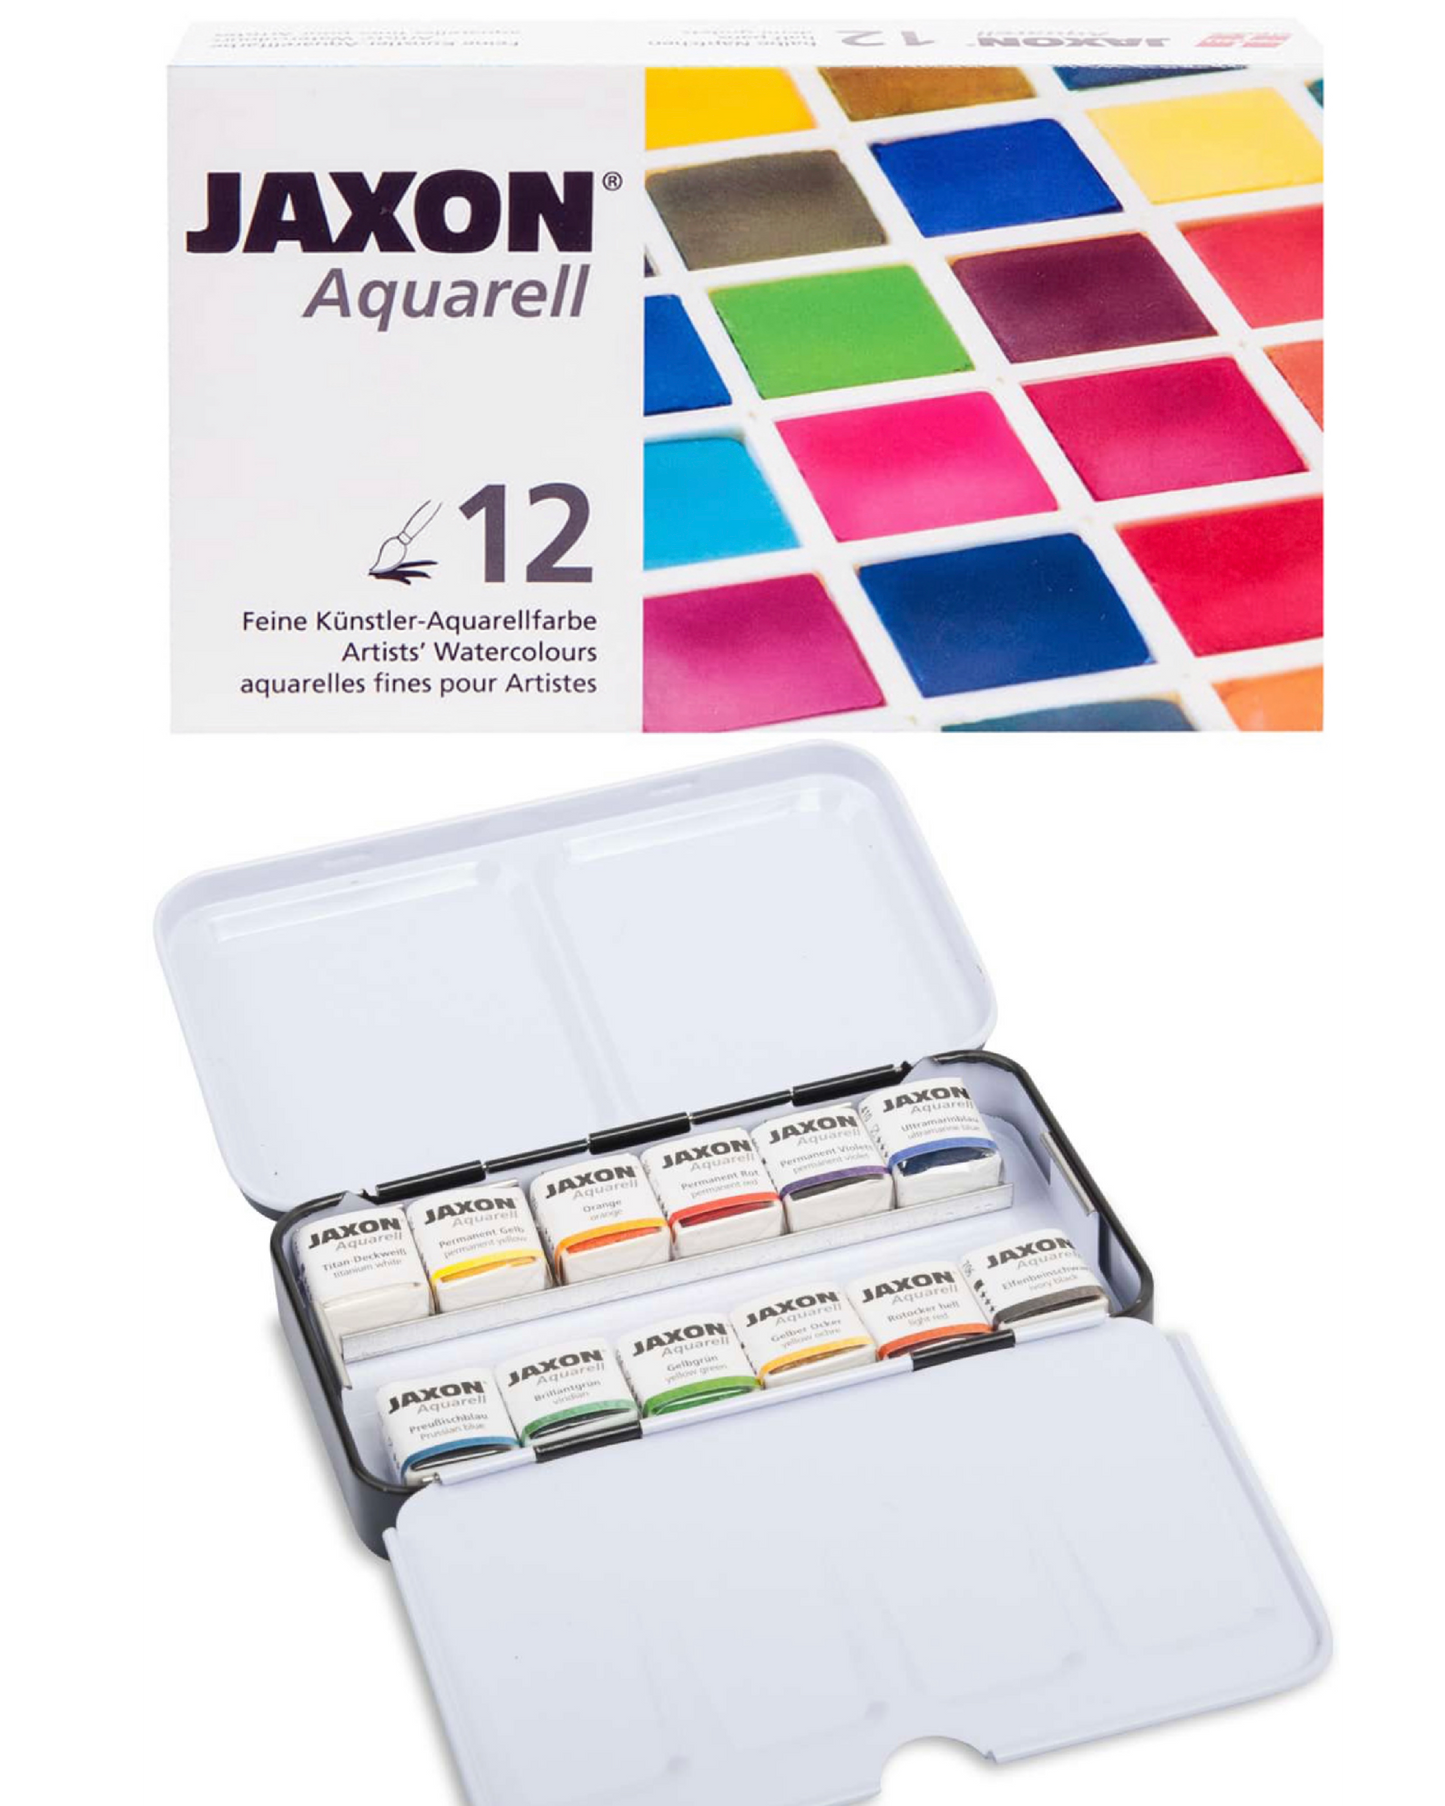 12 Jaxon Fine Artist Watercolors in metal box